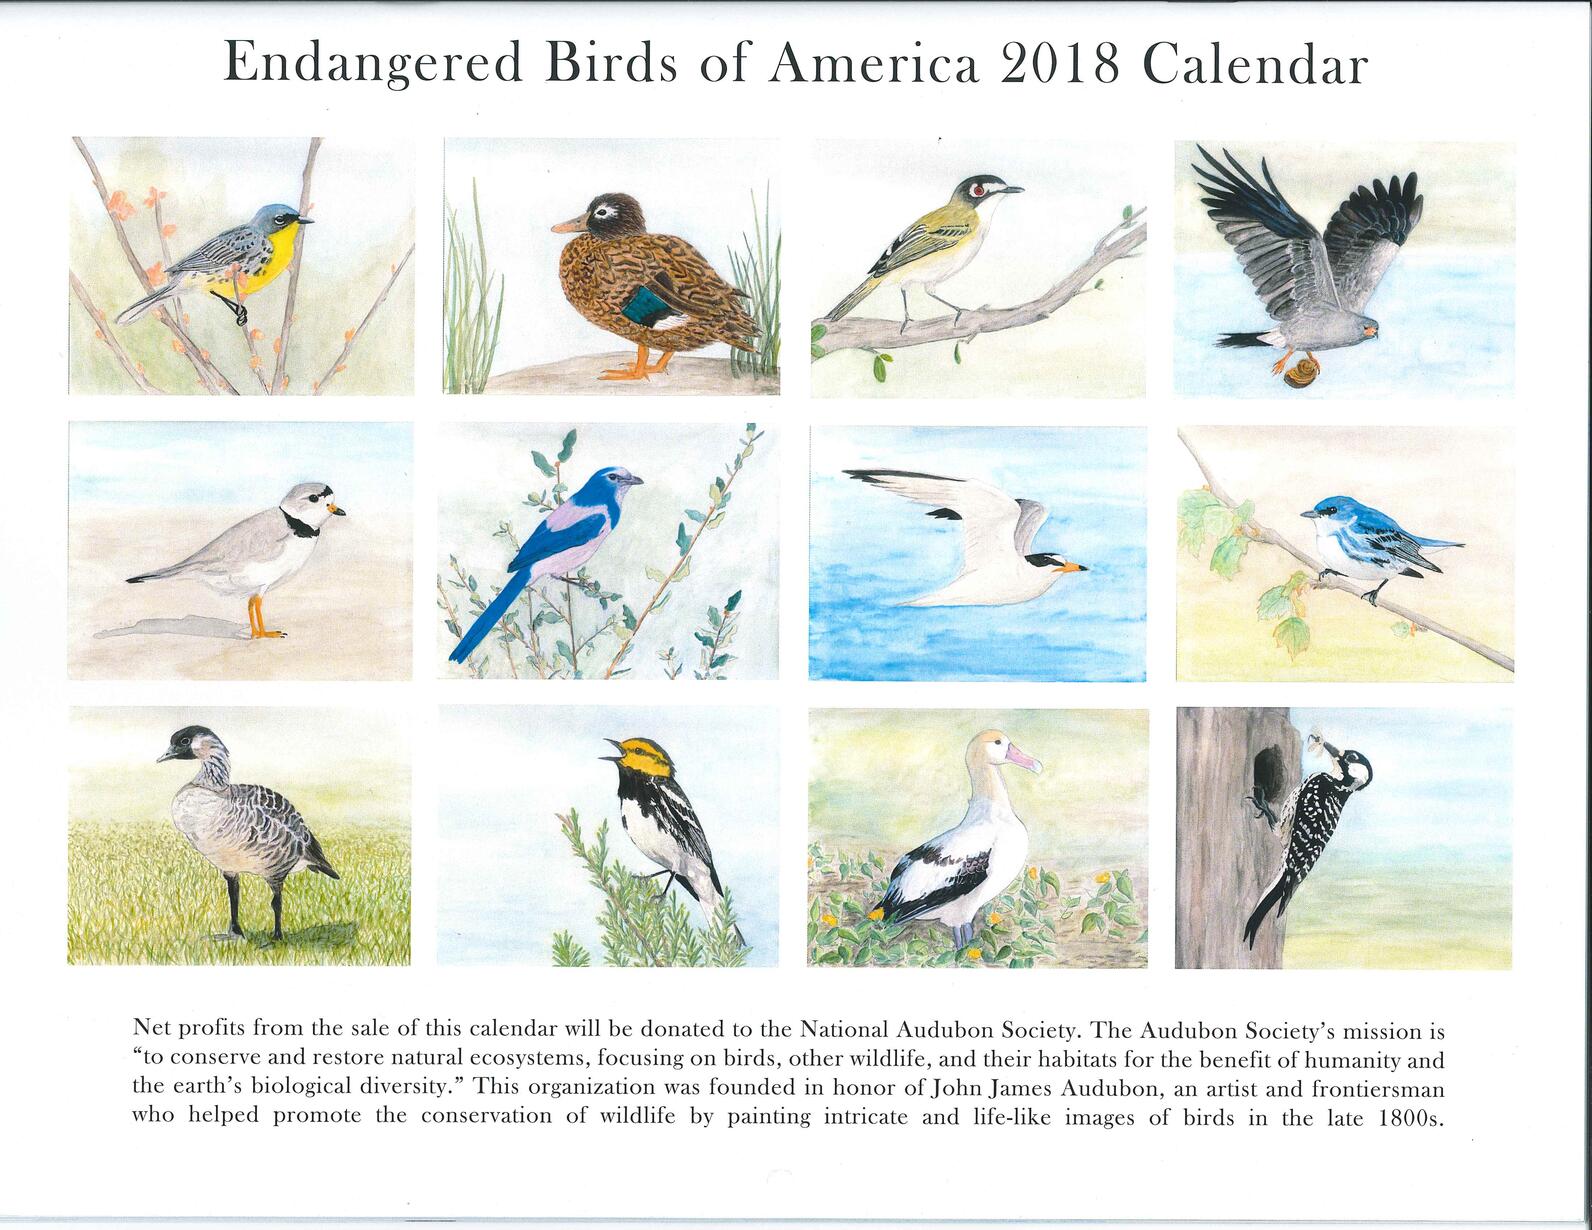 2018 Endangered Birds of America Calendar